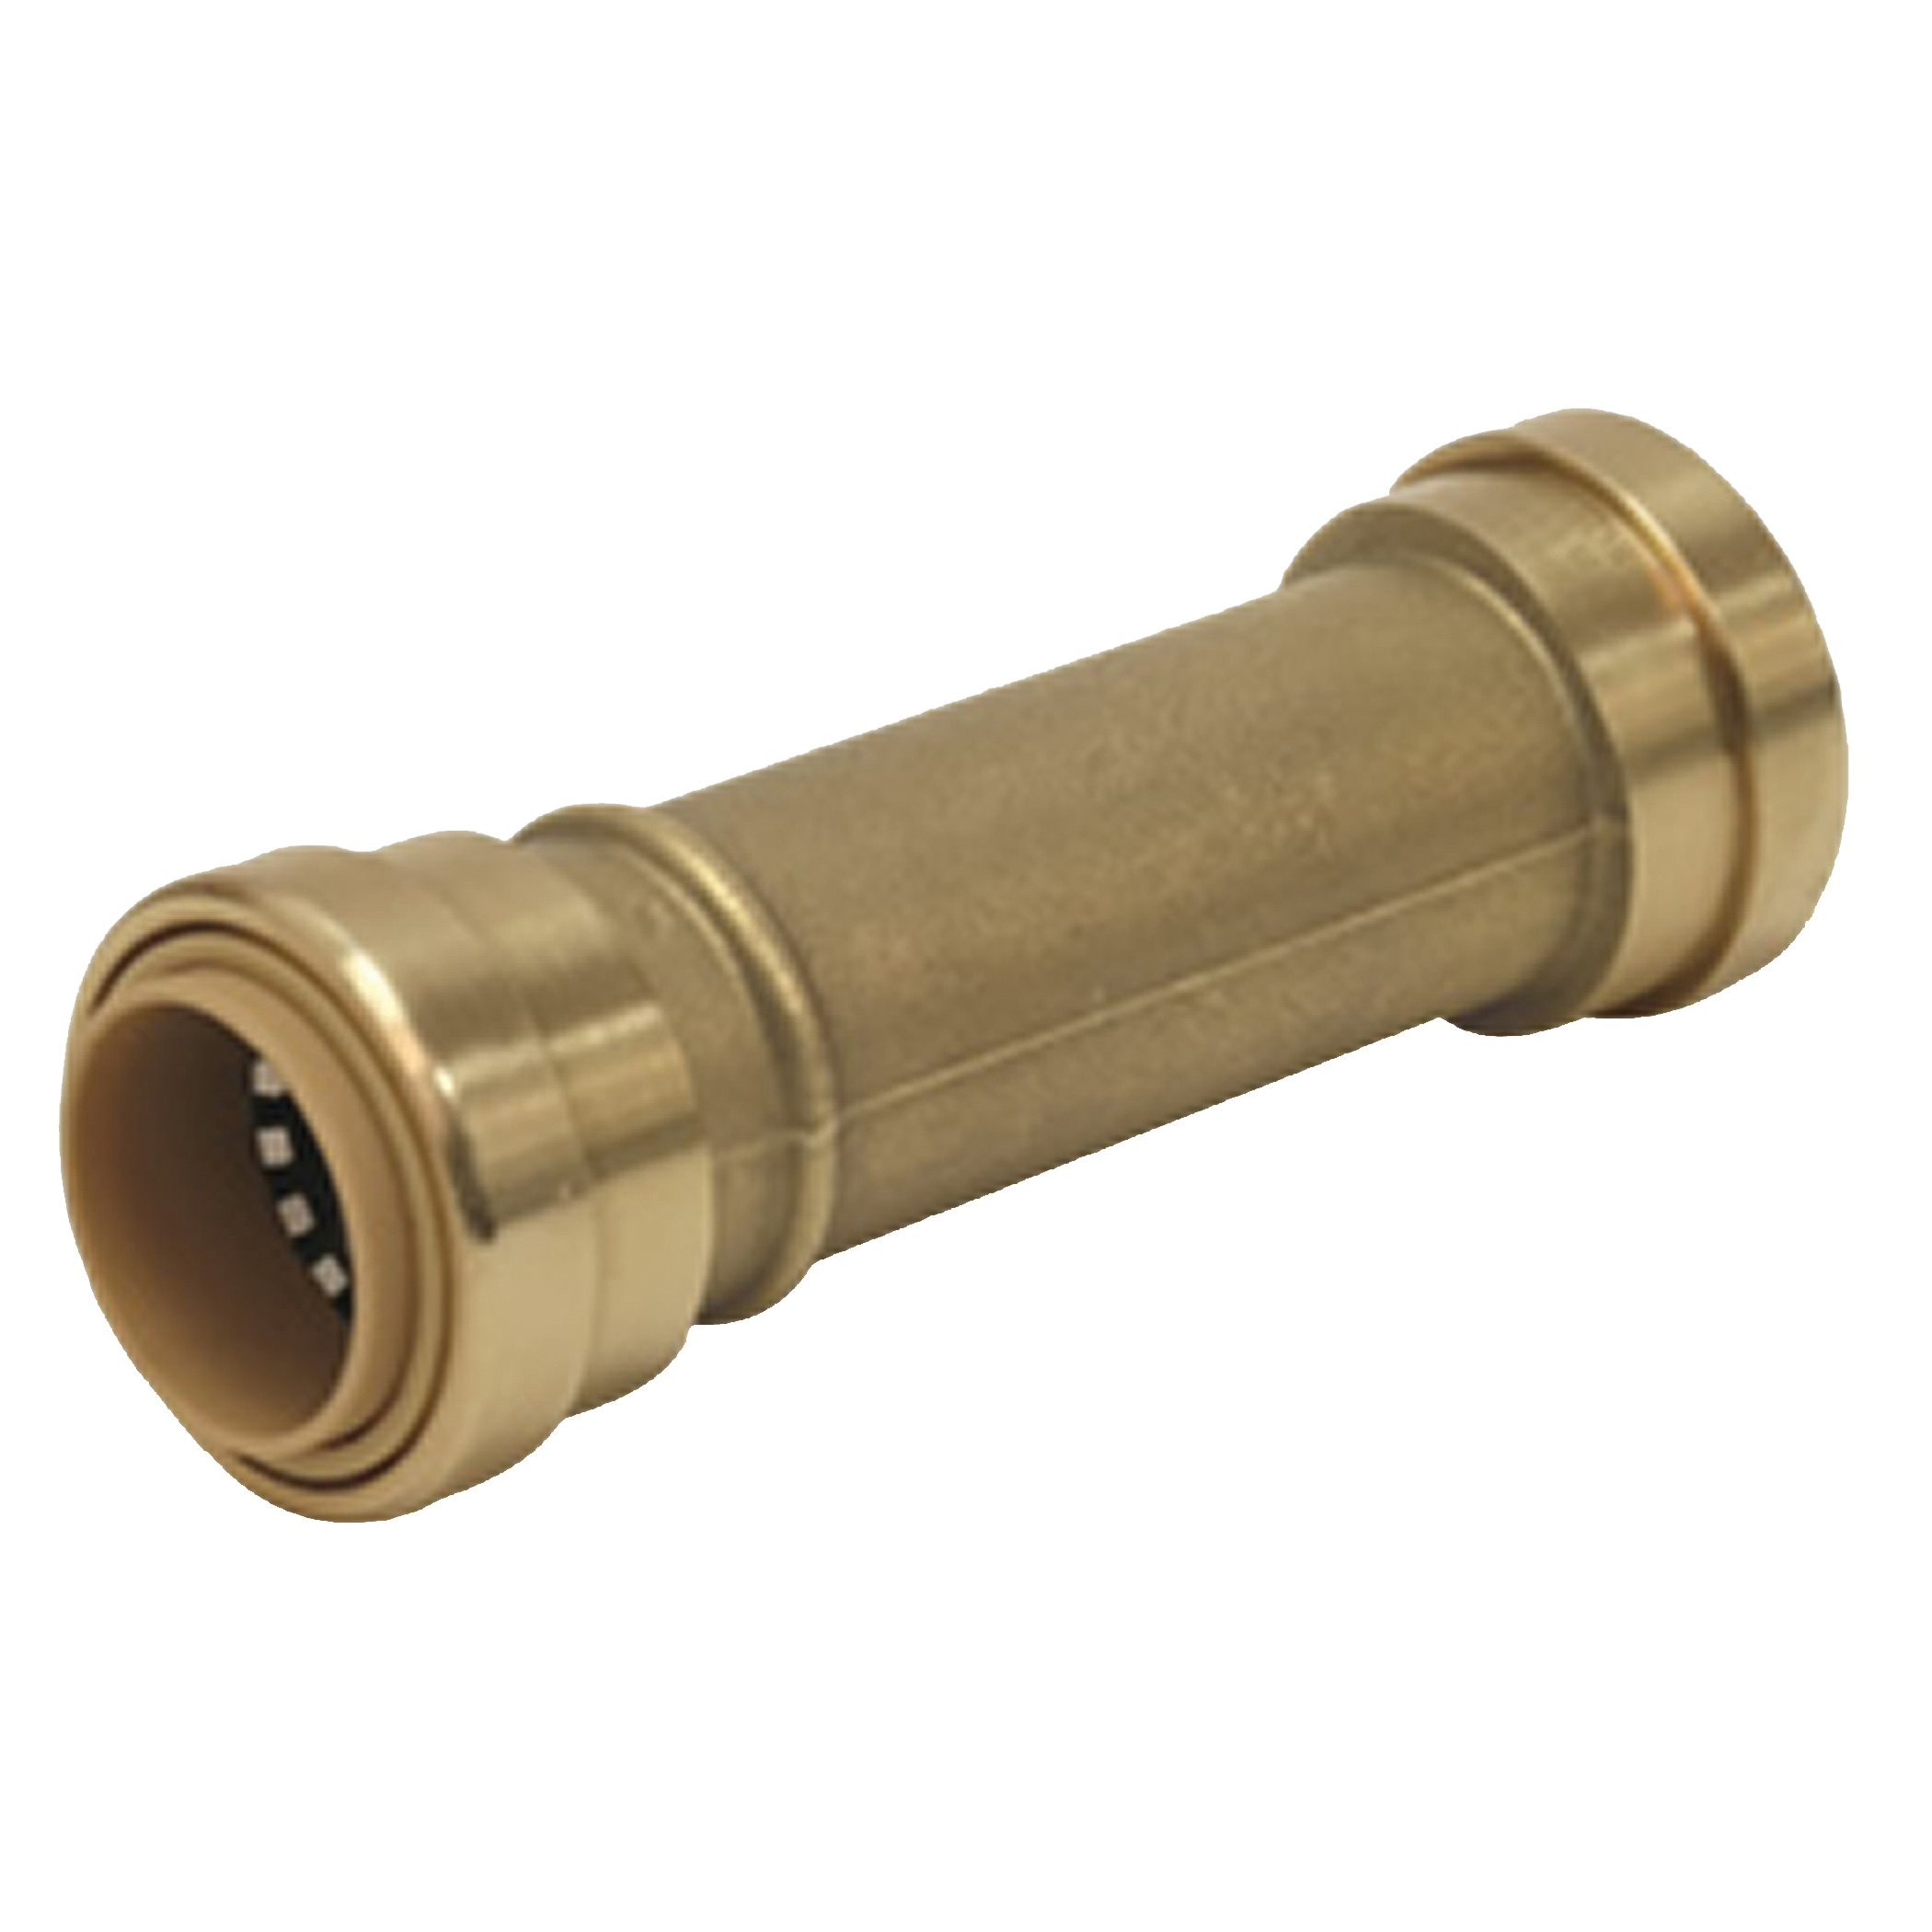 ProLine Series 630-304HC Pipe Coupling, 3/4 in, Brass, 200 psi Pressure